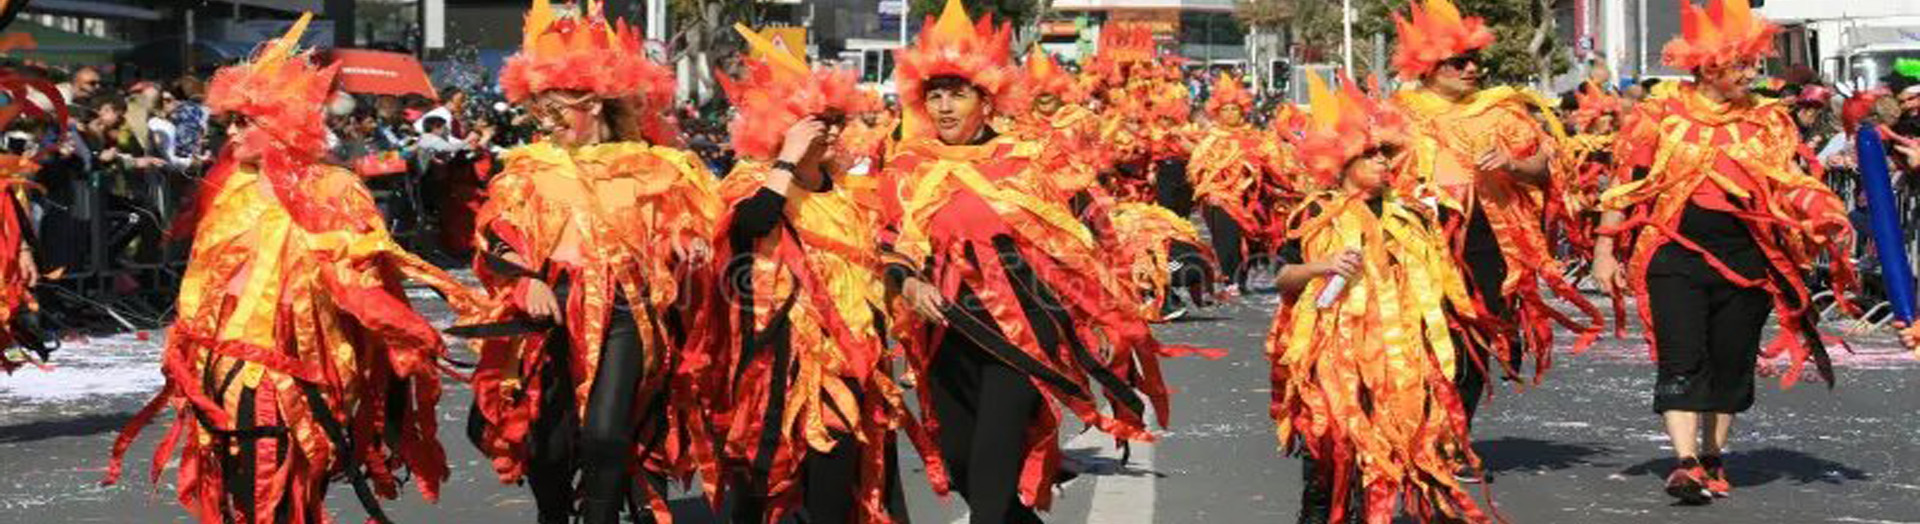 Limassol Carnival in Cyprus